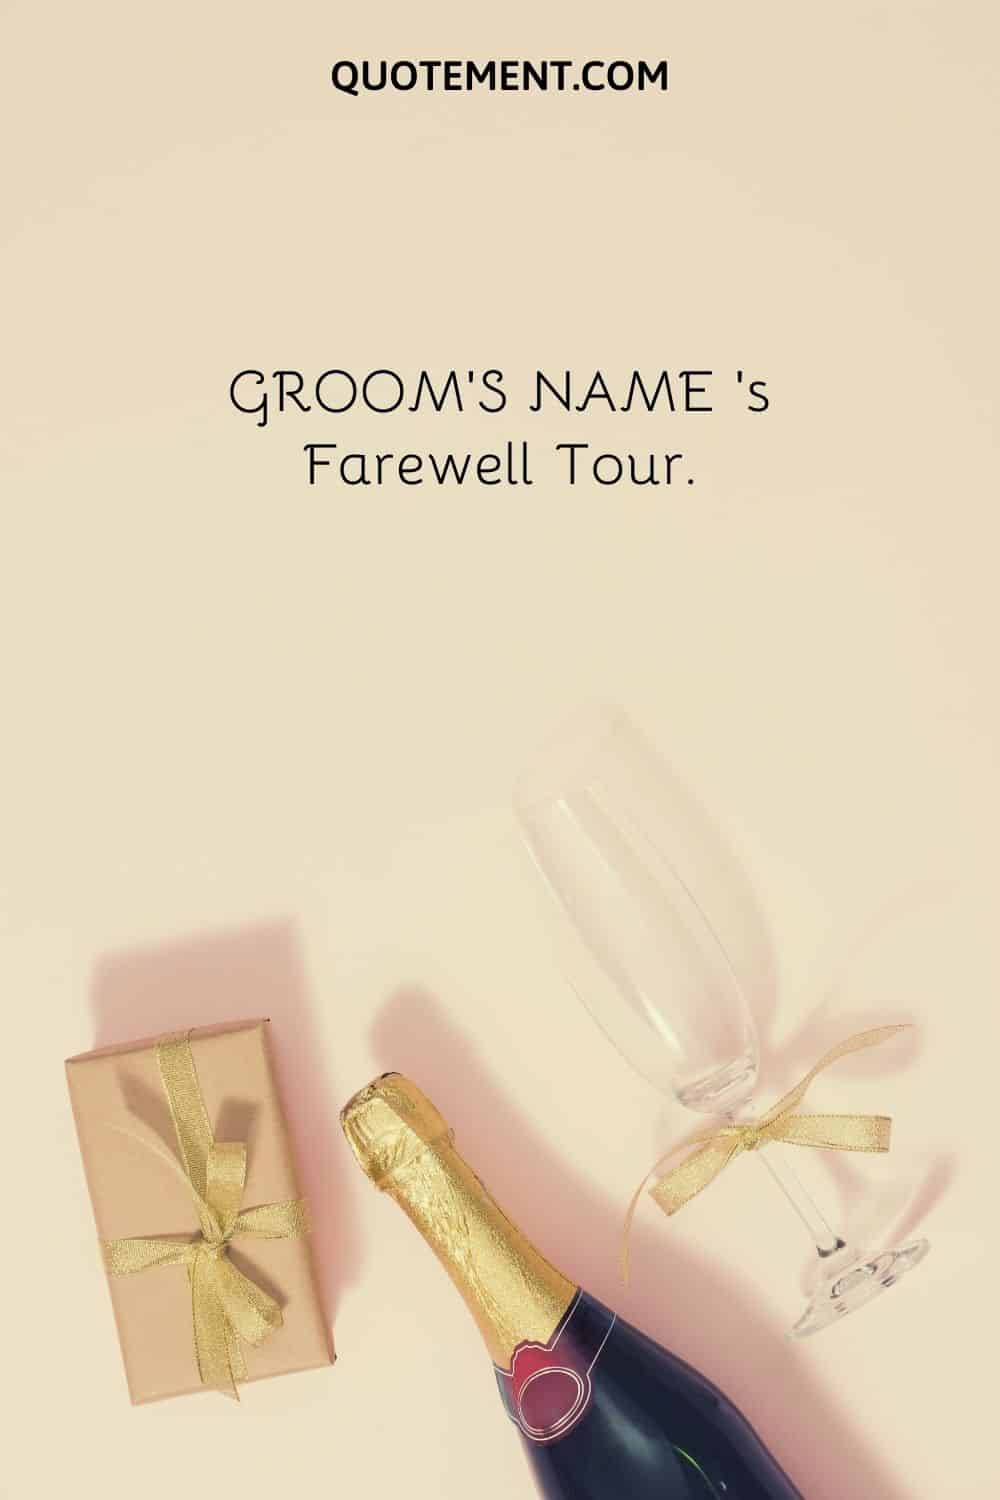 GROOM'S NAME 's Farewell Tour